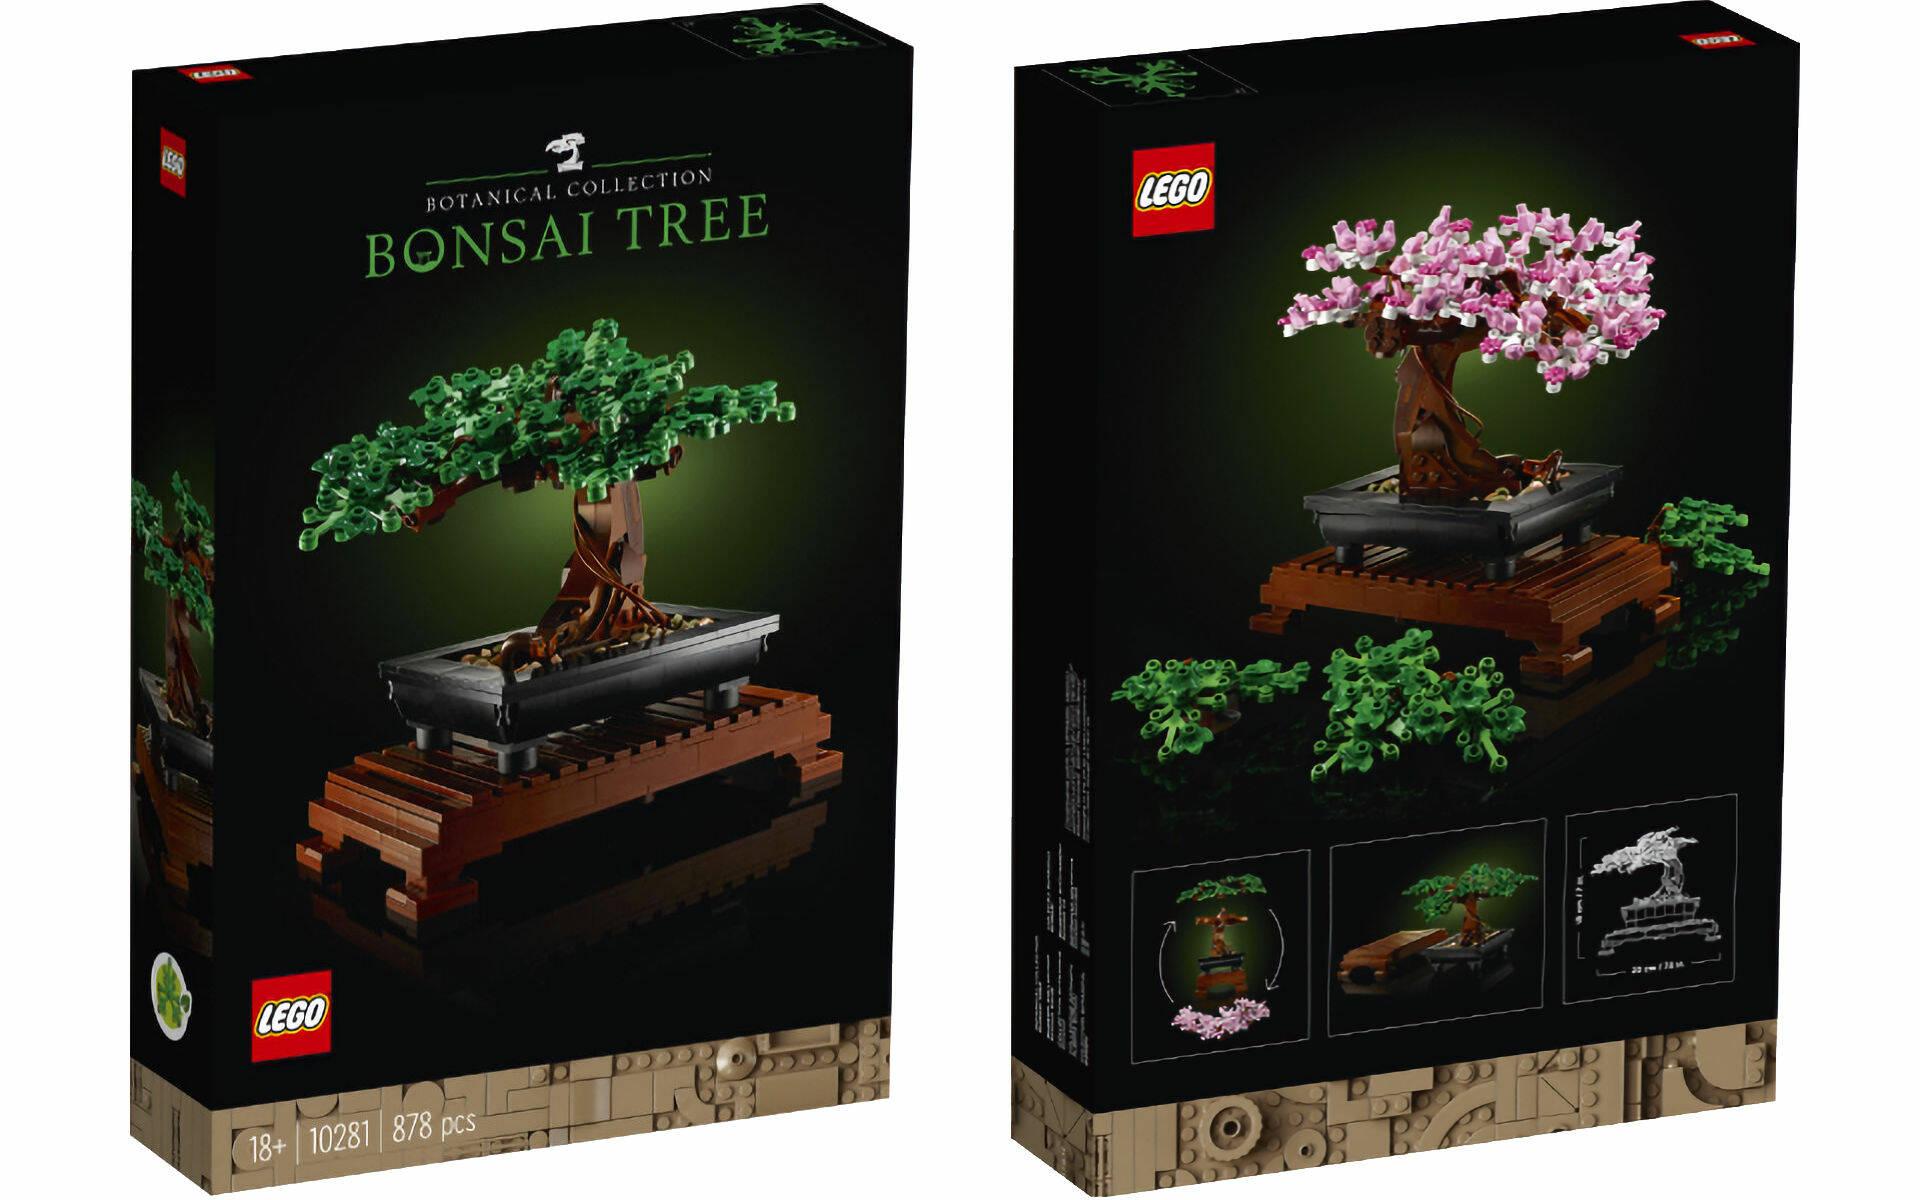 LEGO BOTANICAL COLLECTION BONSAI TREE